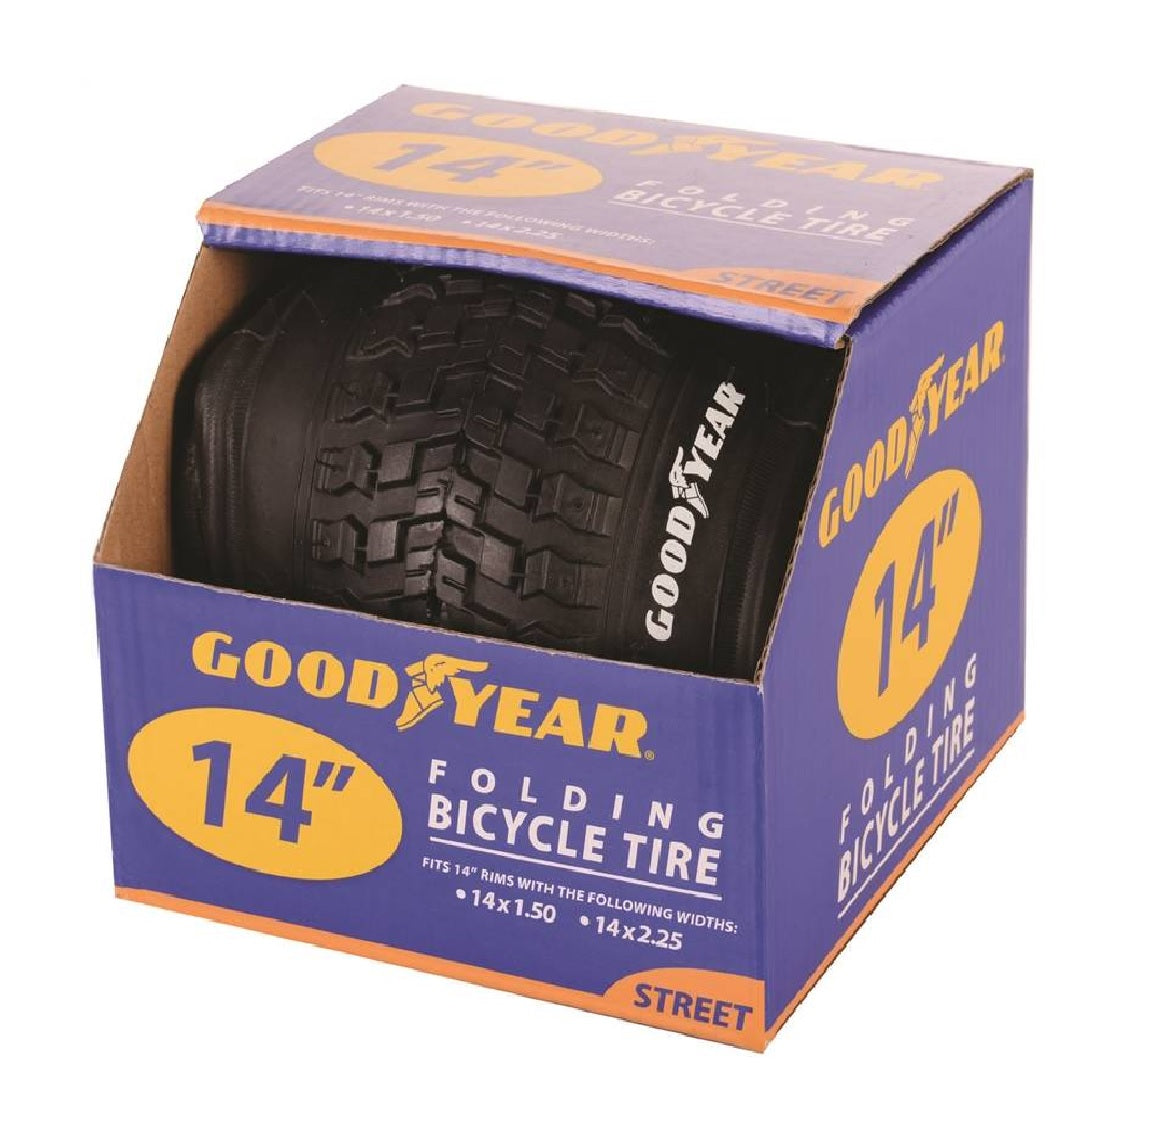 Goodyear 91104 14" Folding Bicycle Tire, Black